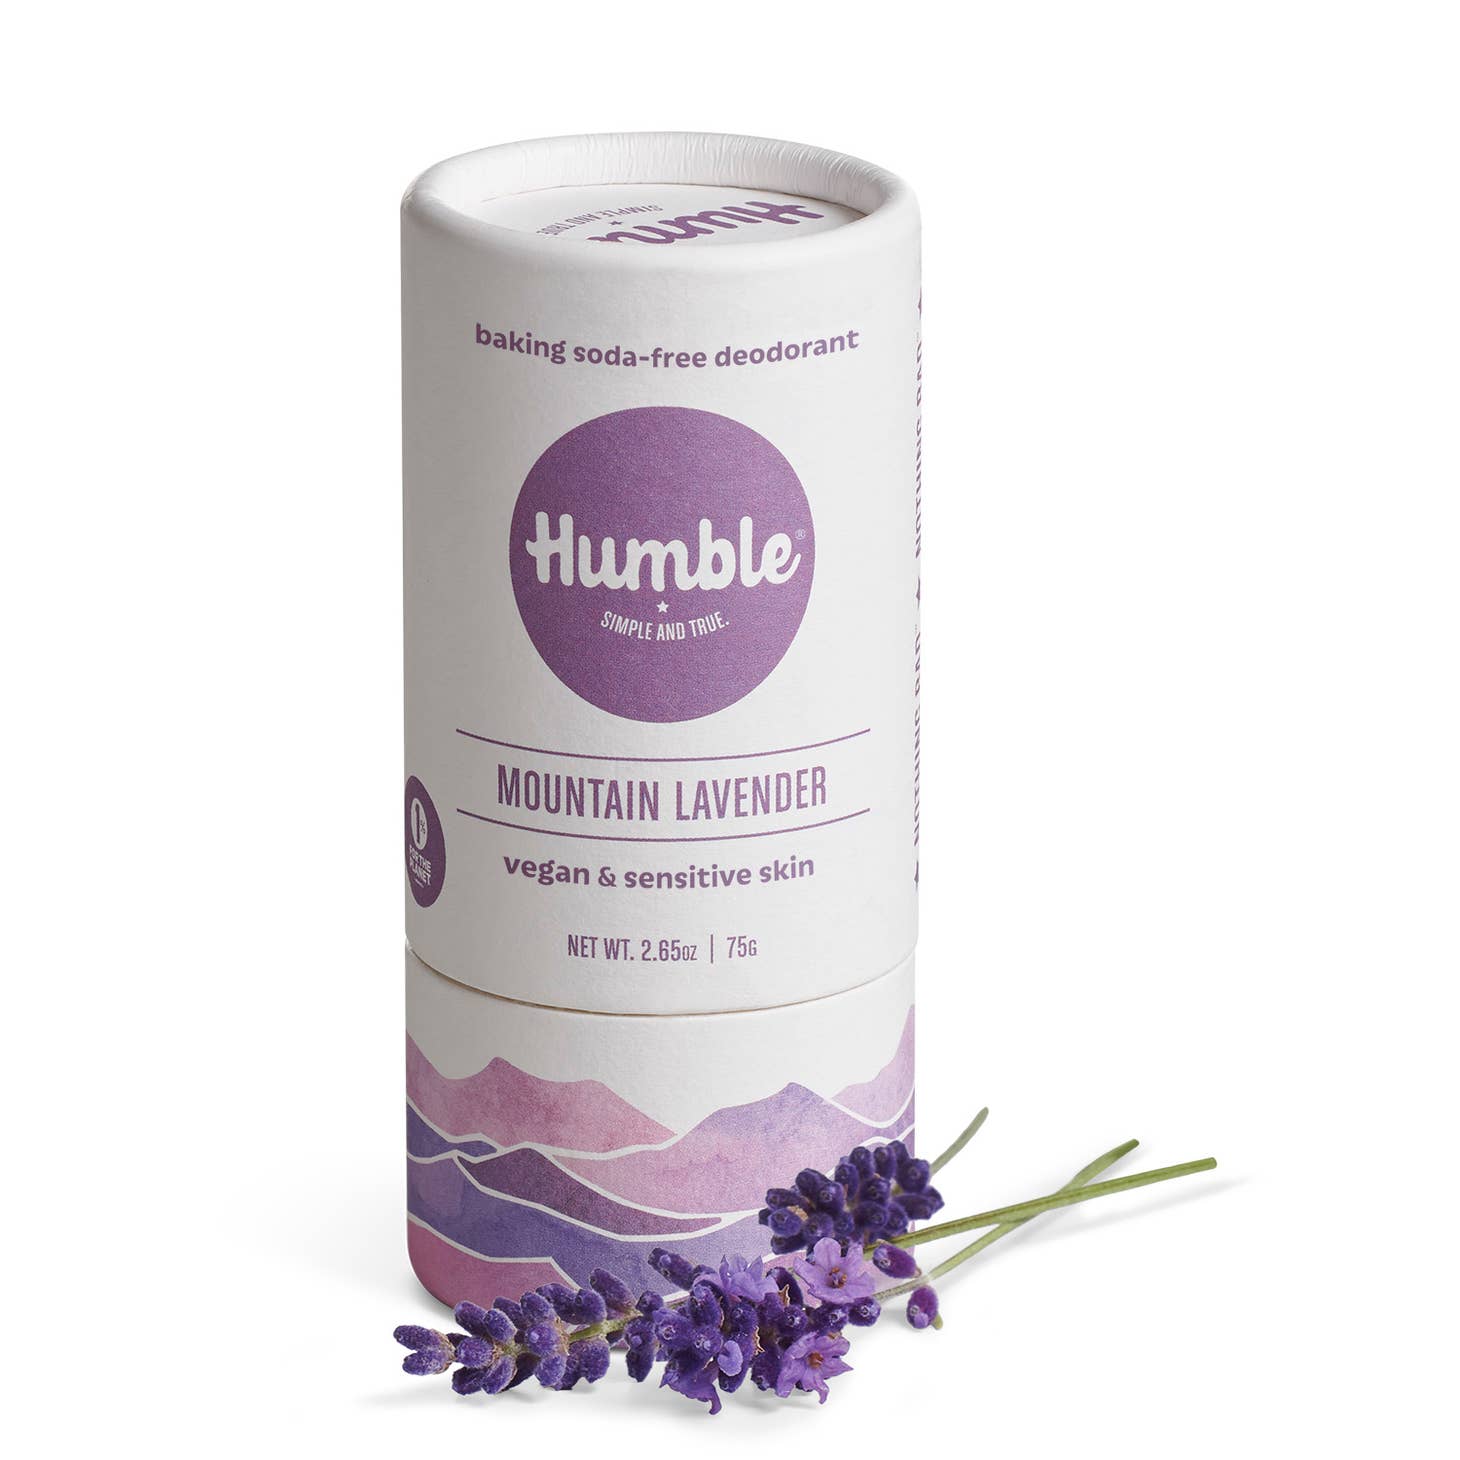 Humble Baking Soda Free Deodorant - Mountain Lavender